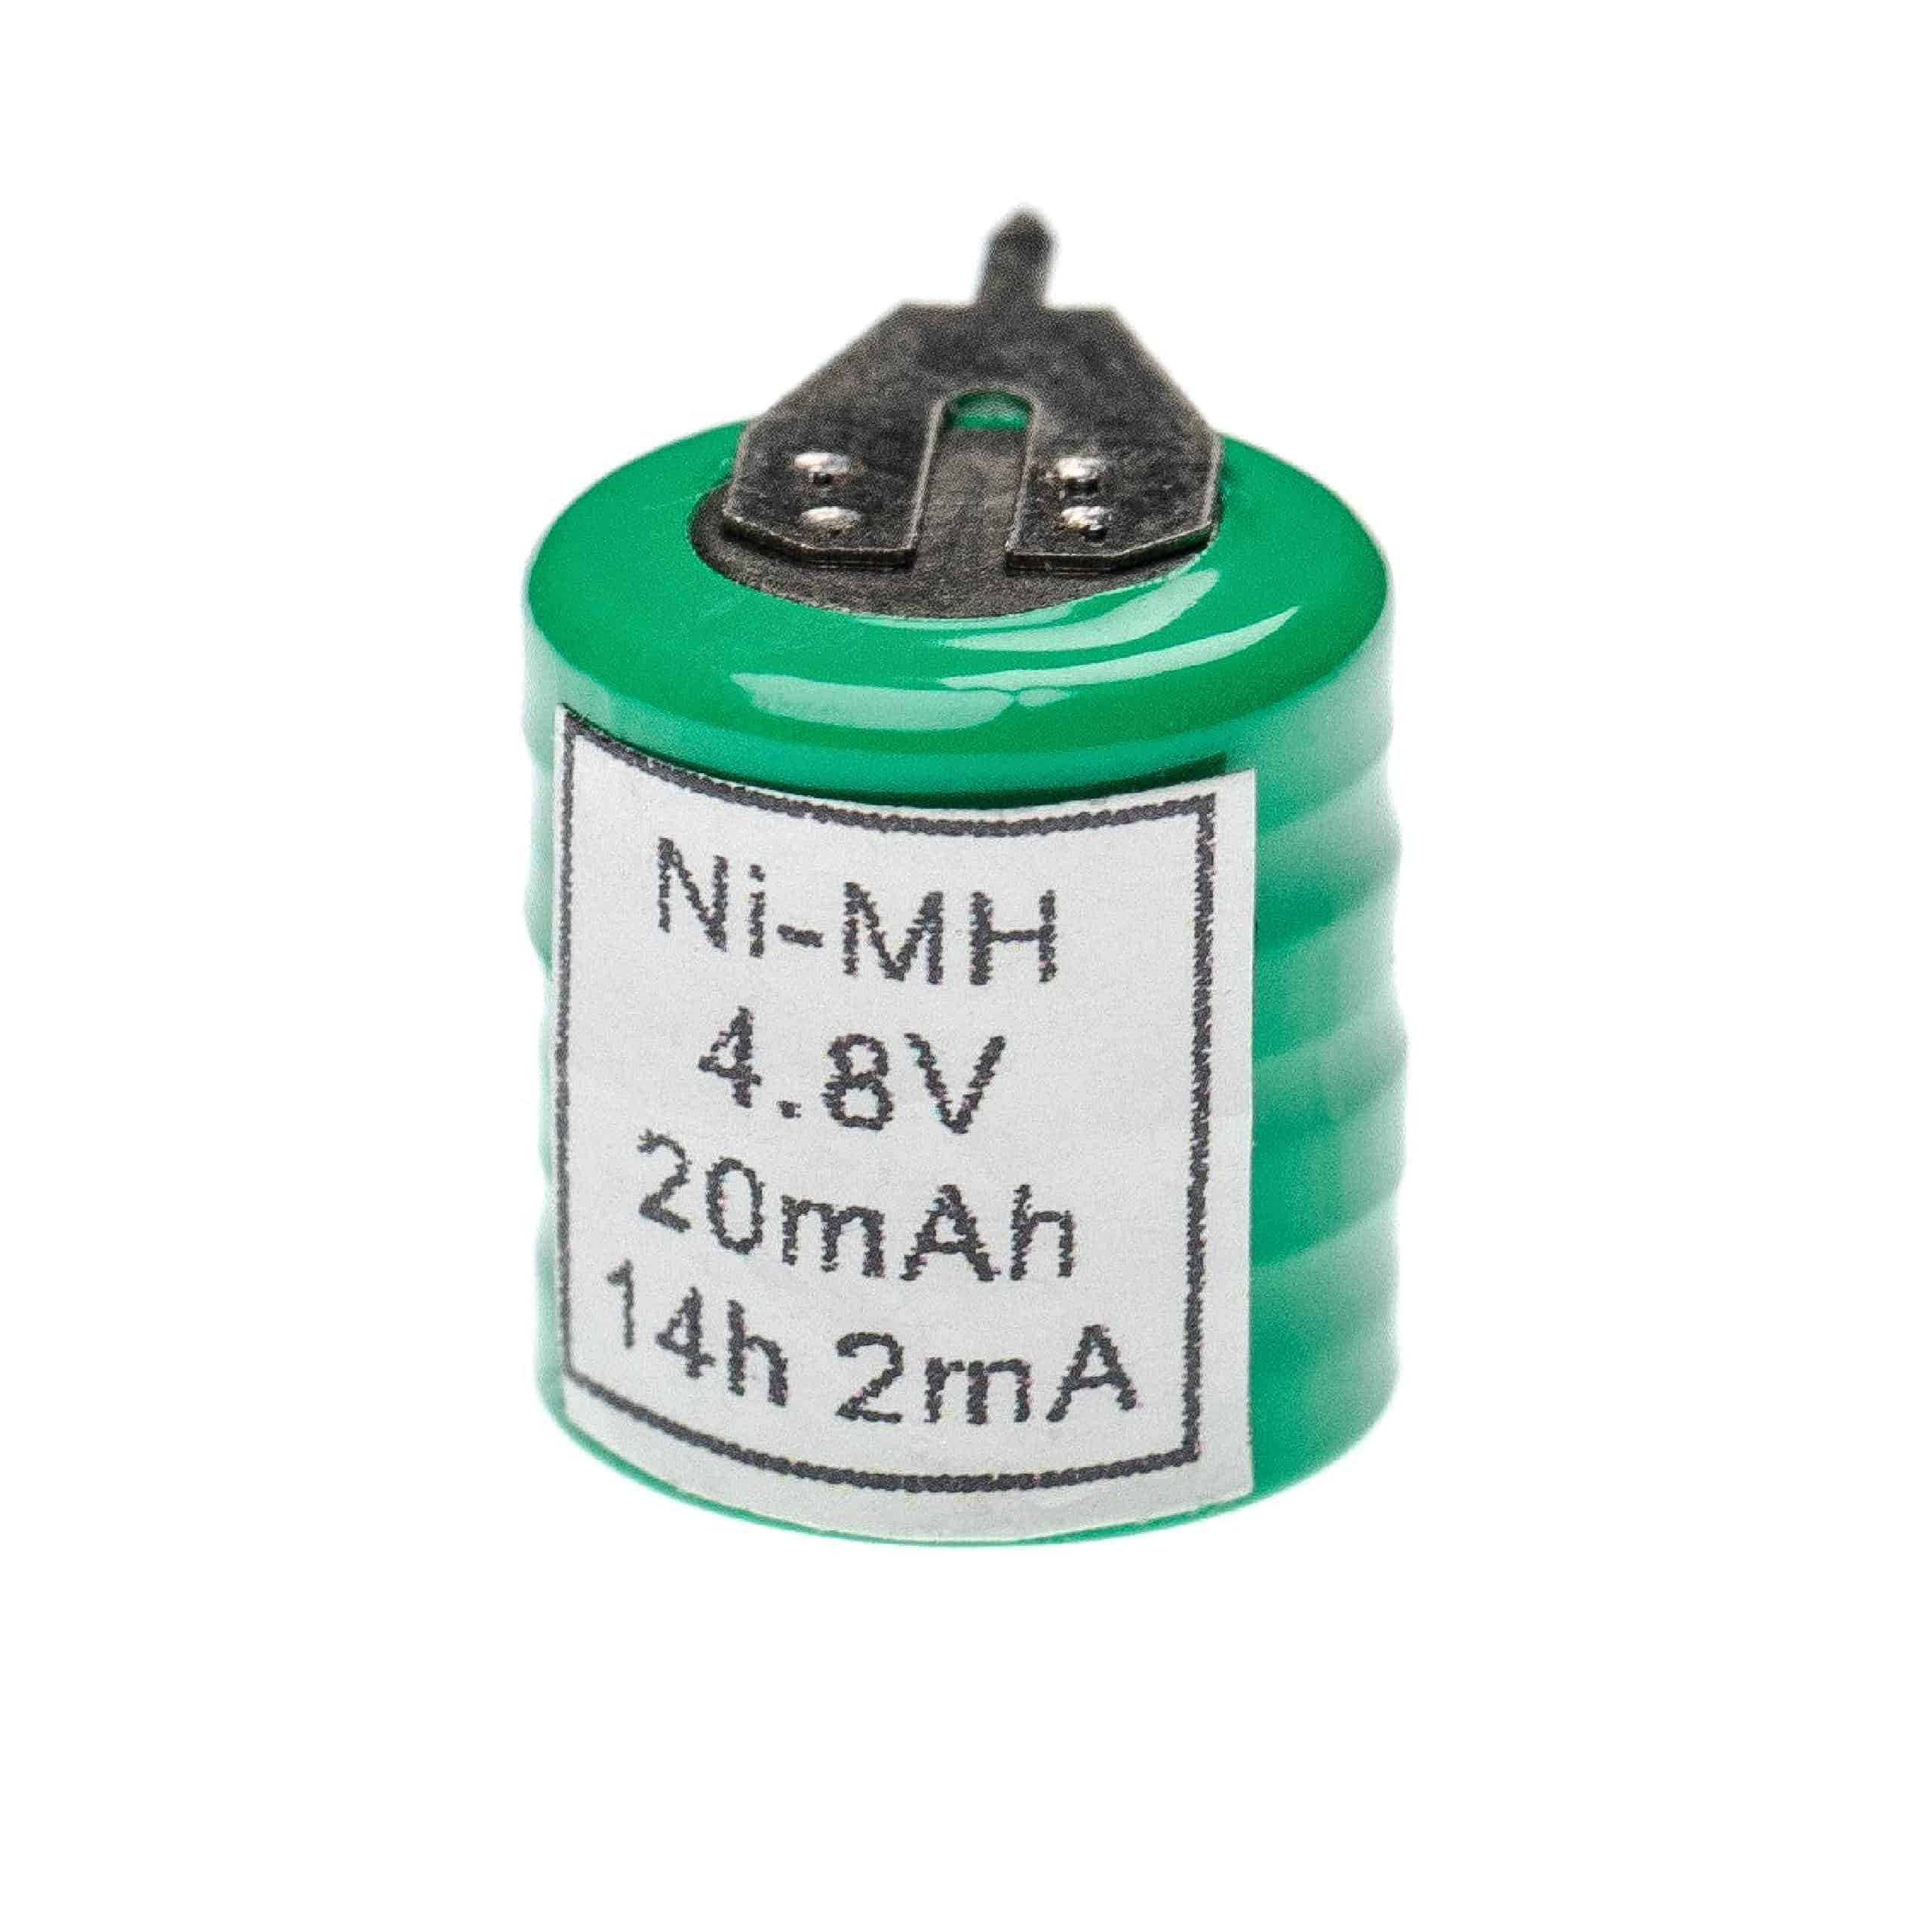 Akumulator guzikowy (4x ogniwo) typ 4/V15H 2 pin do modeli, lamp solarnych itp. - 20 mAh, 4,8 V, NiMH